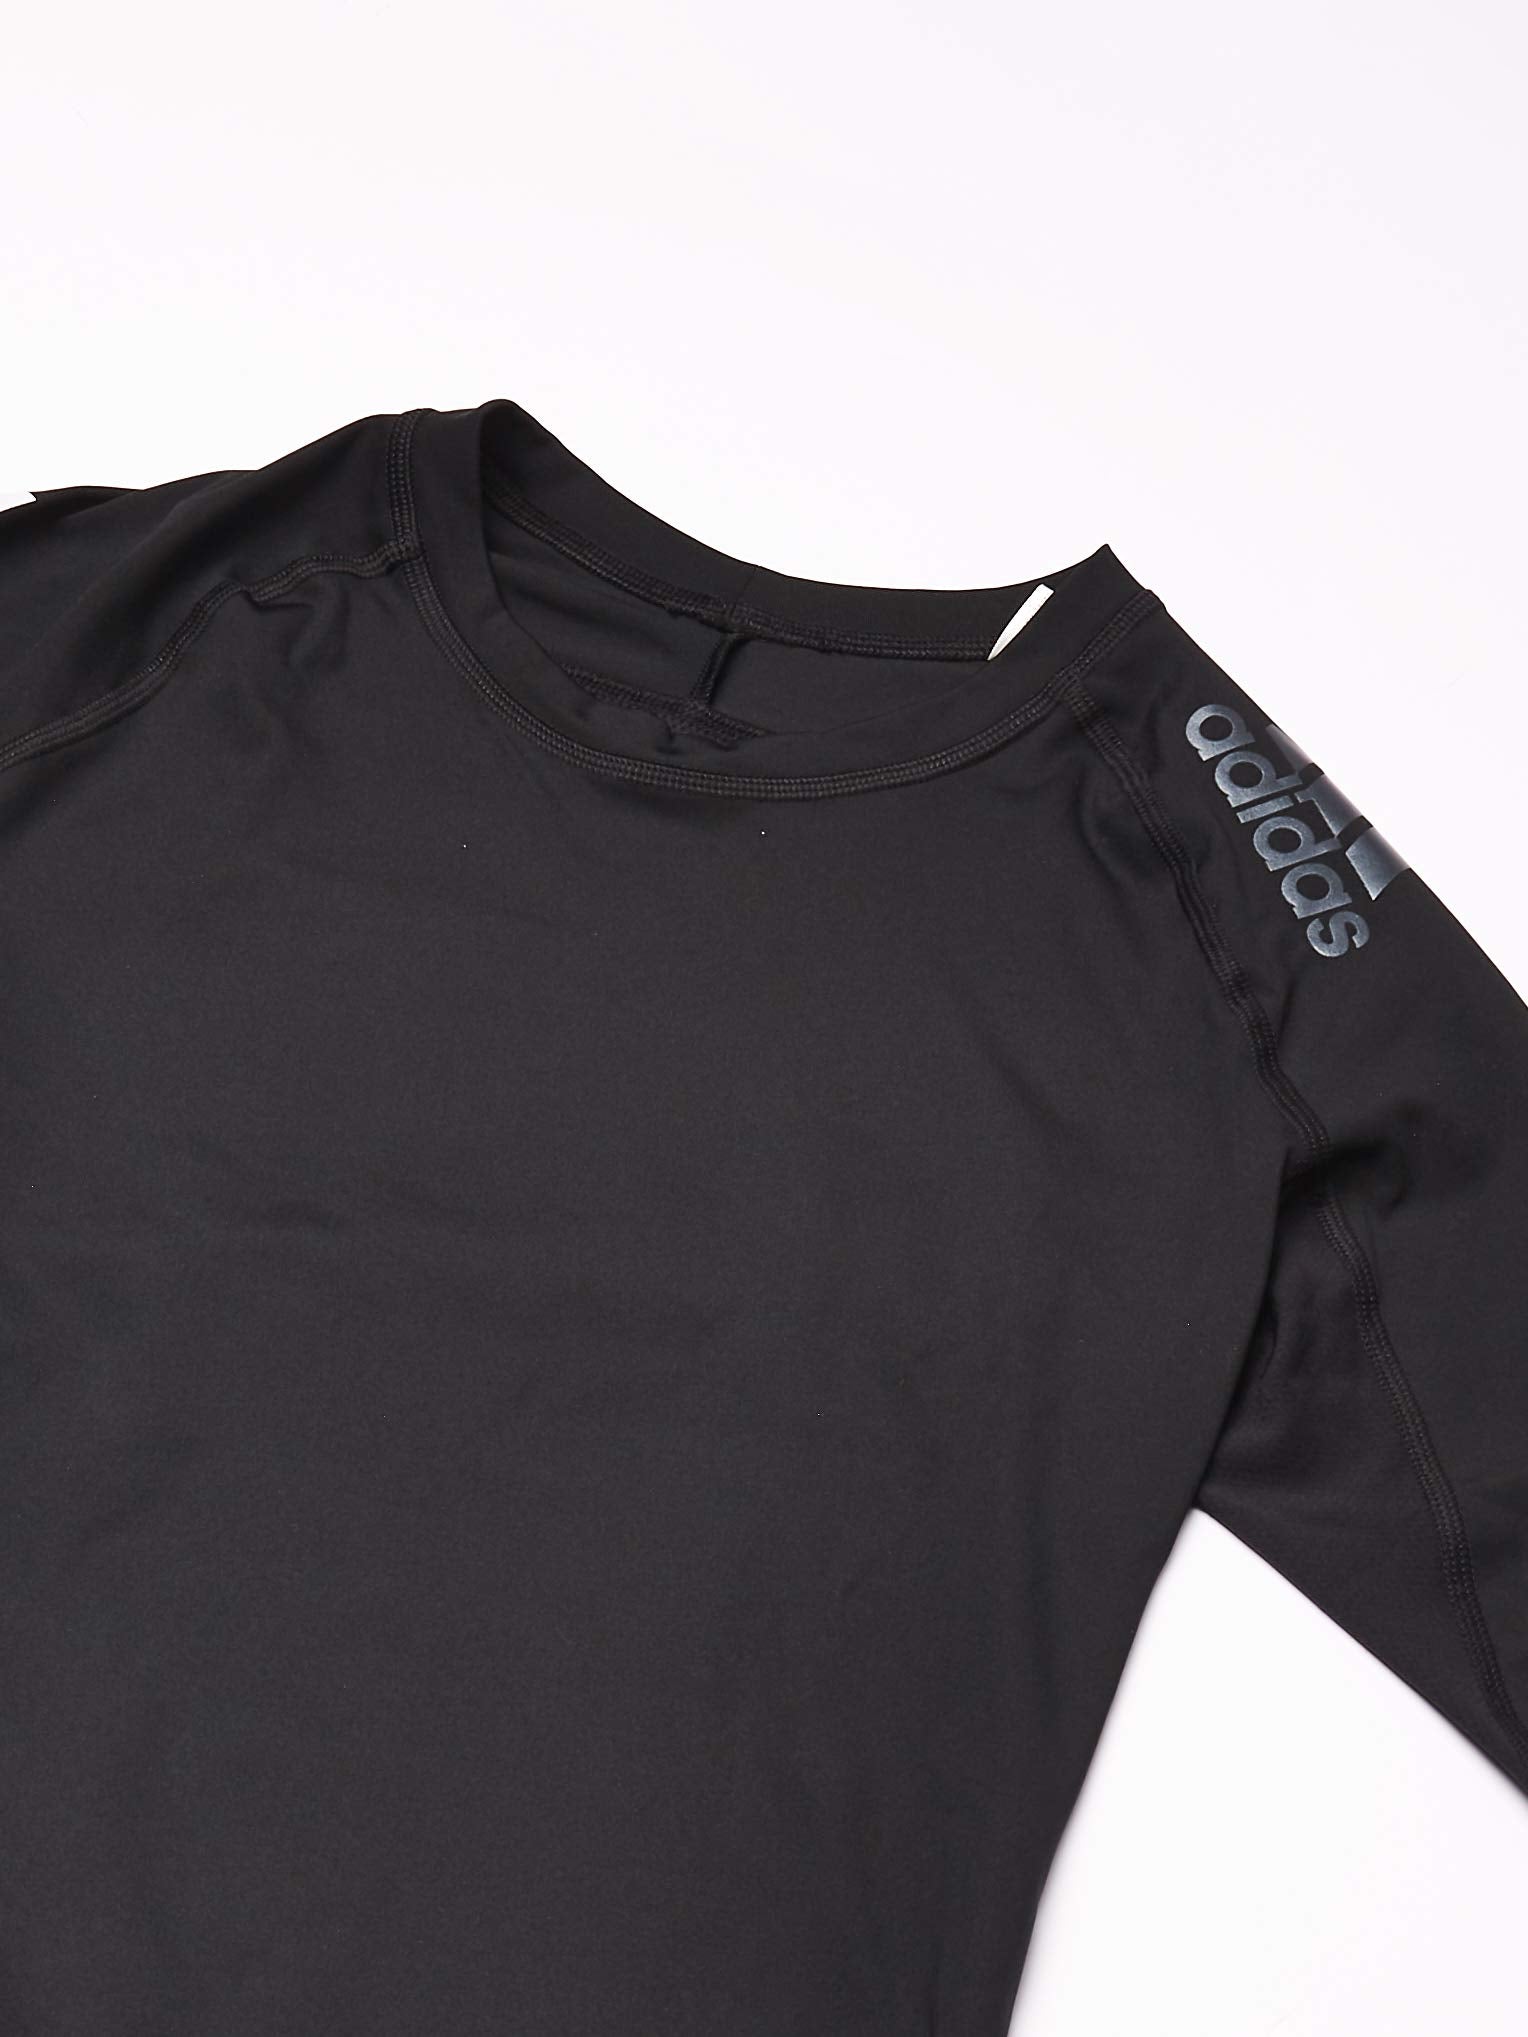 Adidas Men's Long Sleeved T-Shirt